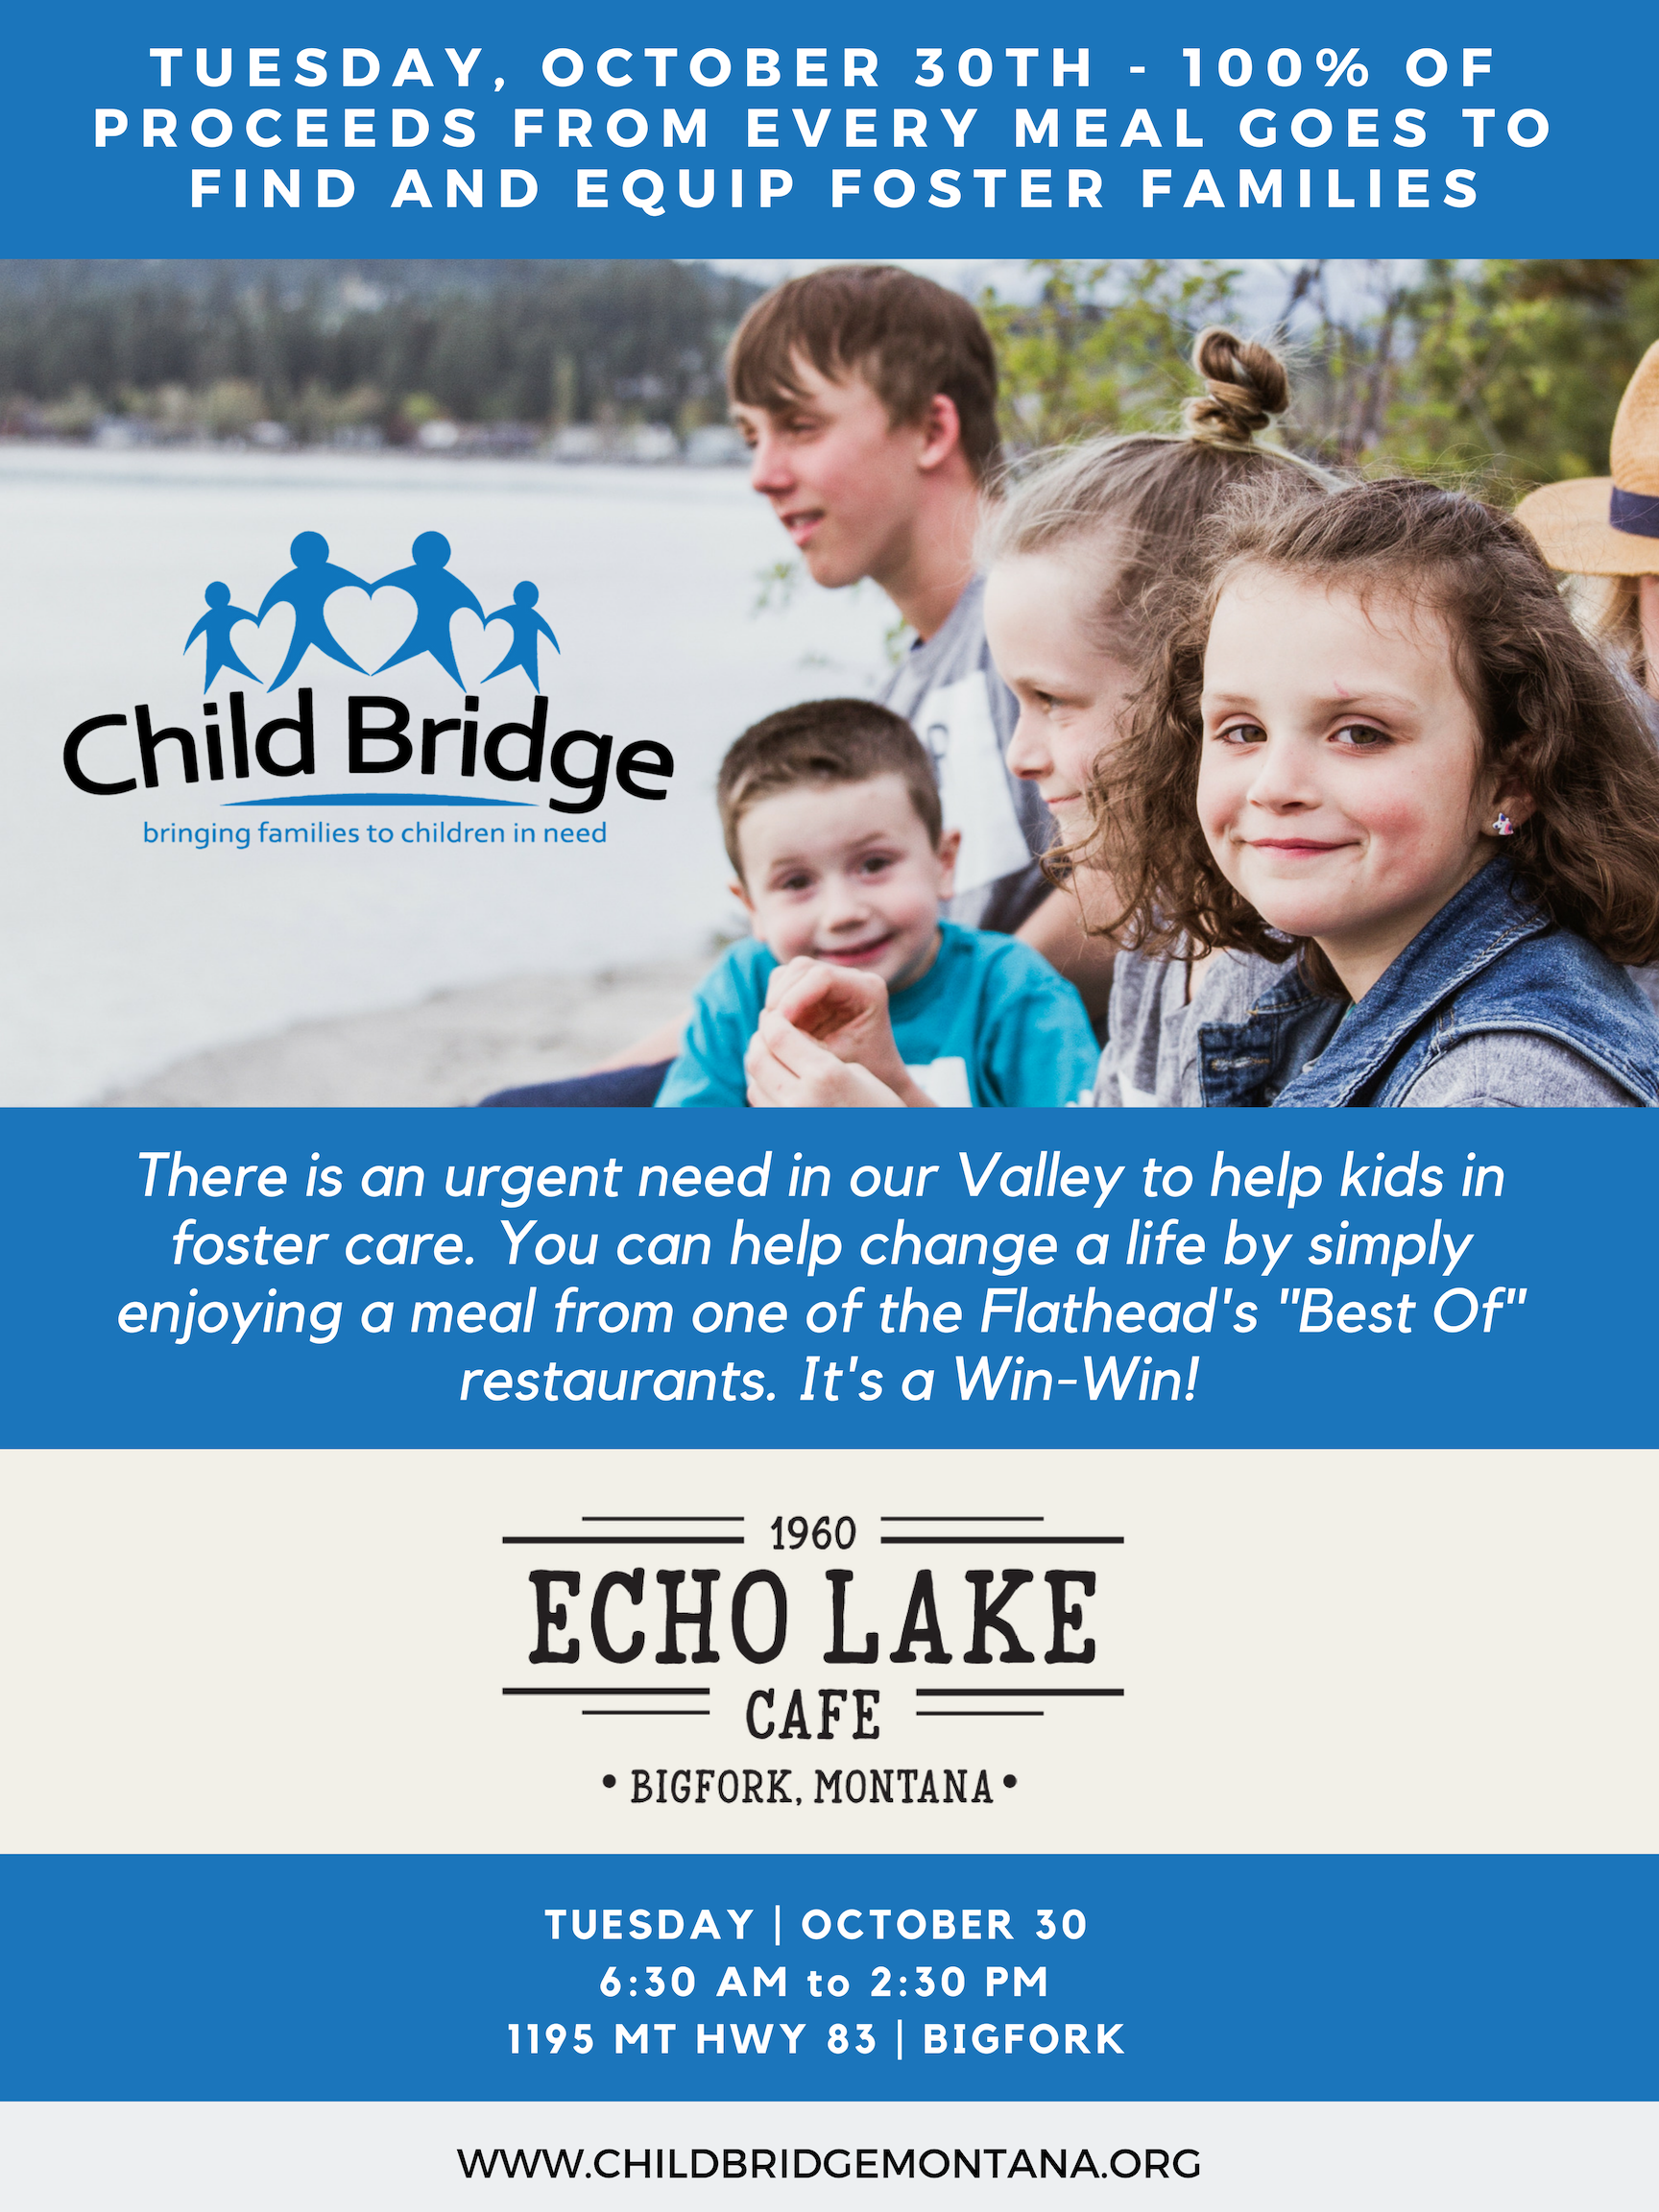 Child Bridge Day at Echo Lake Cafe